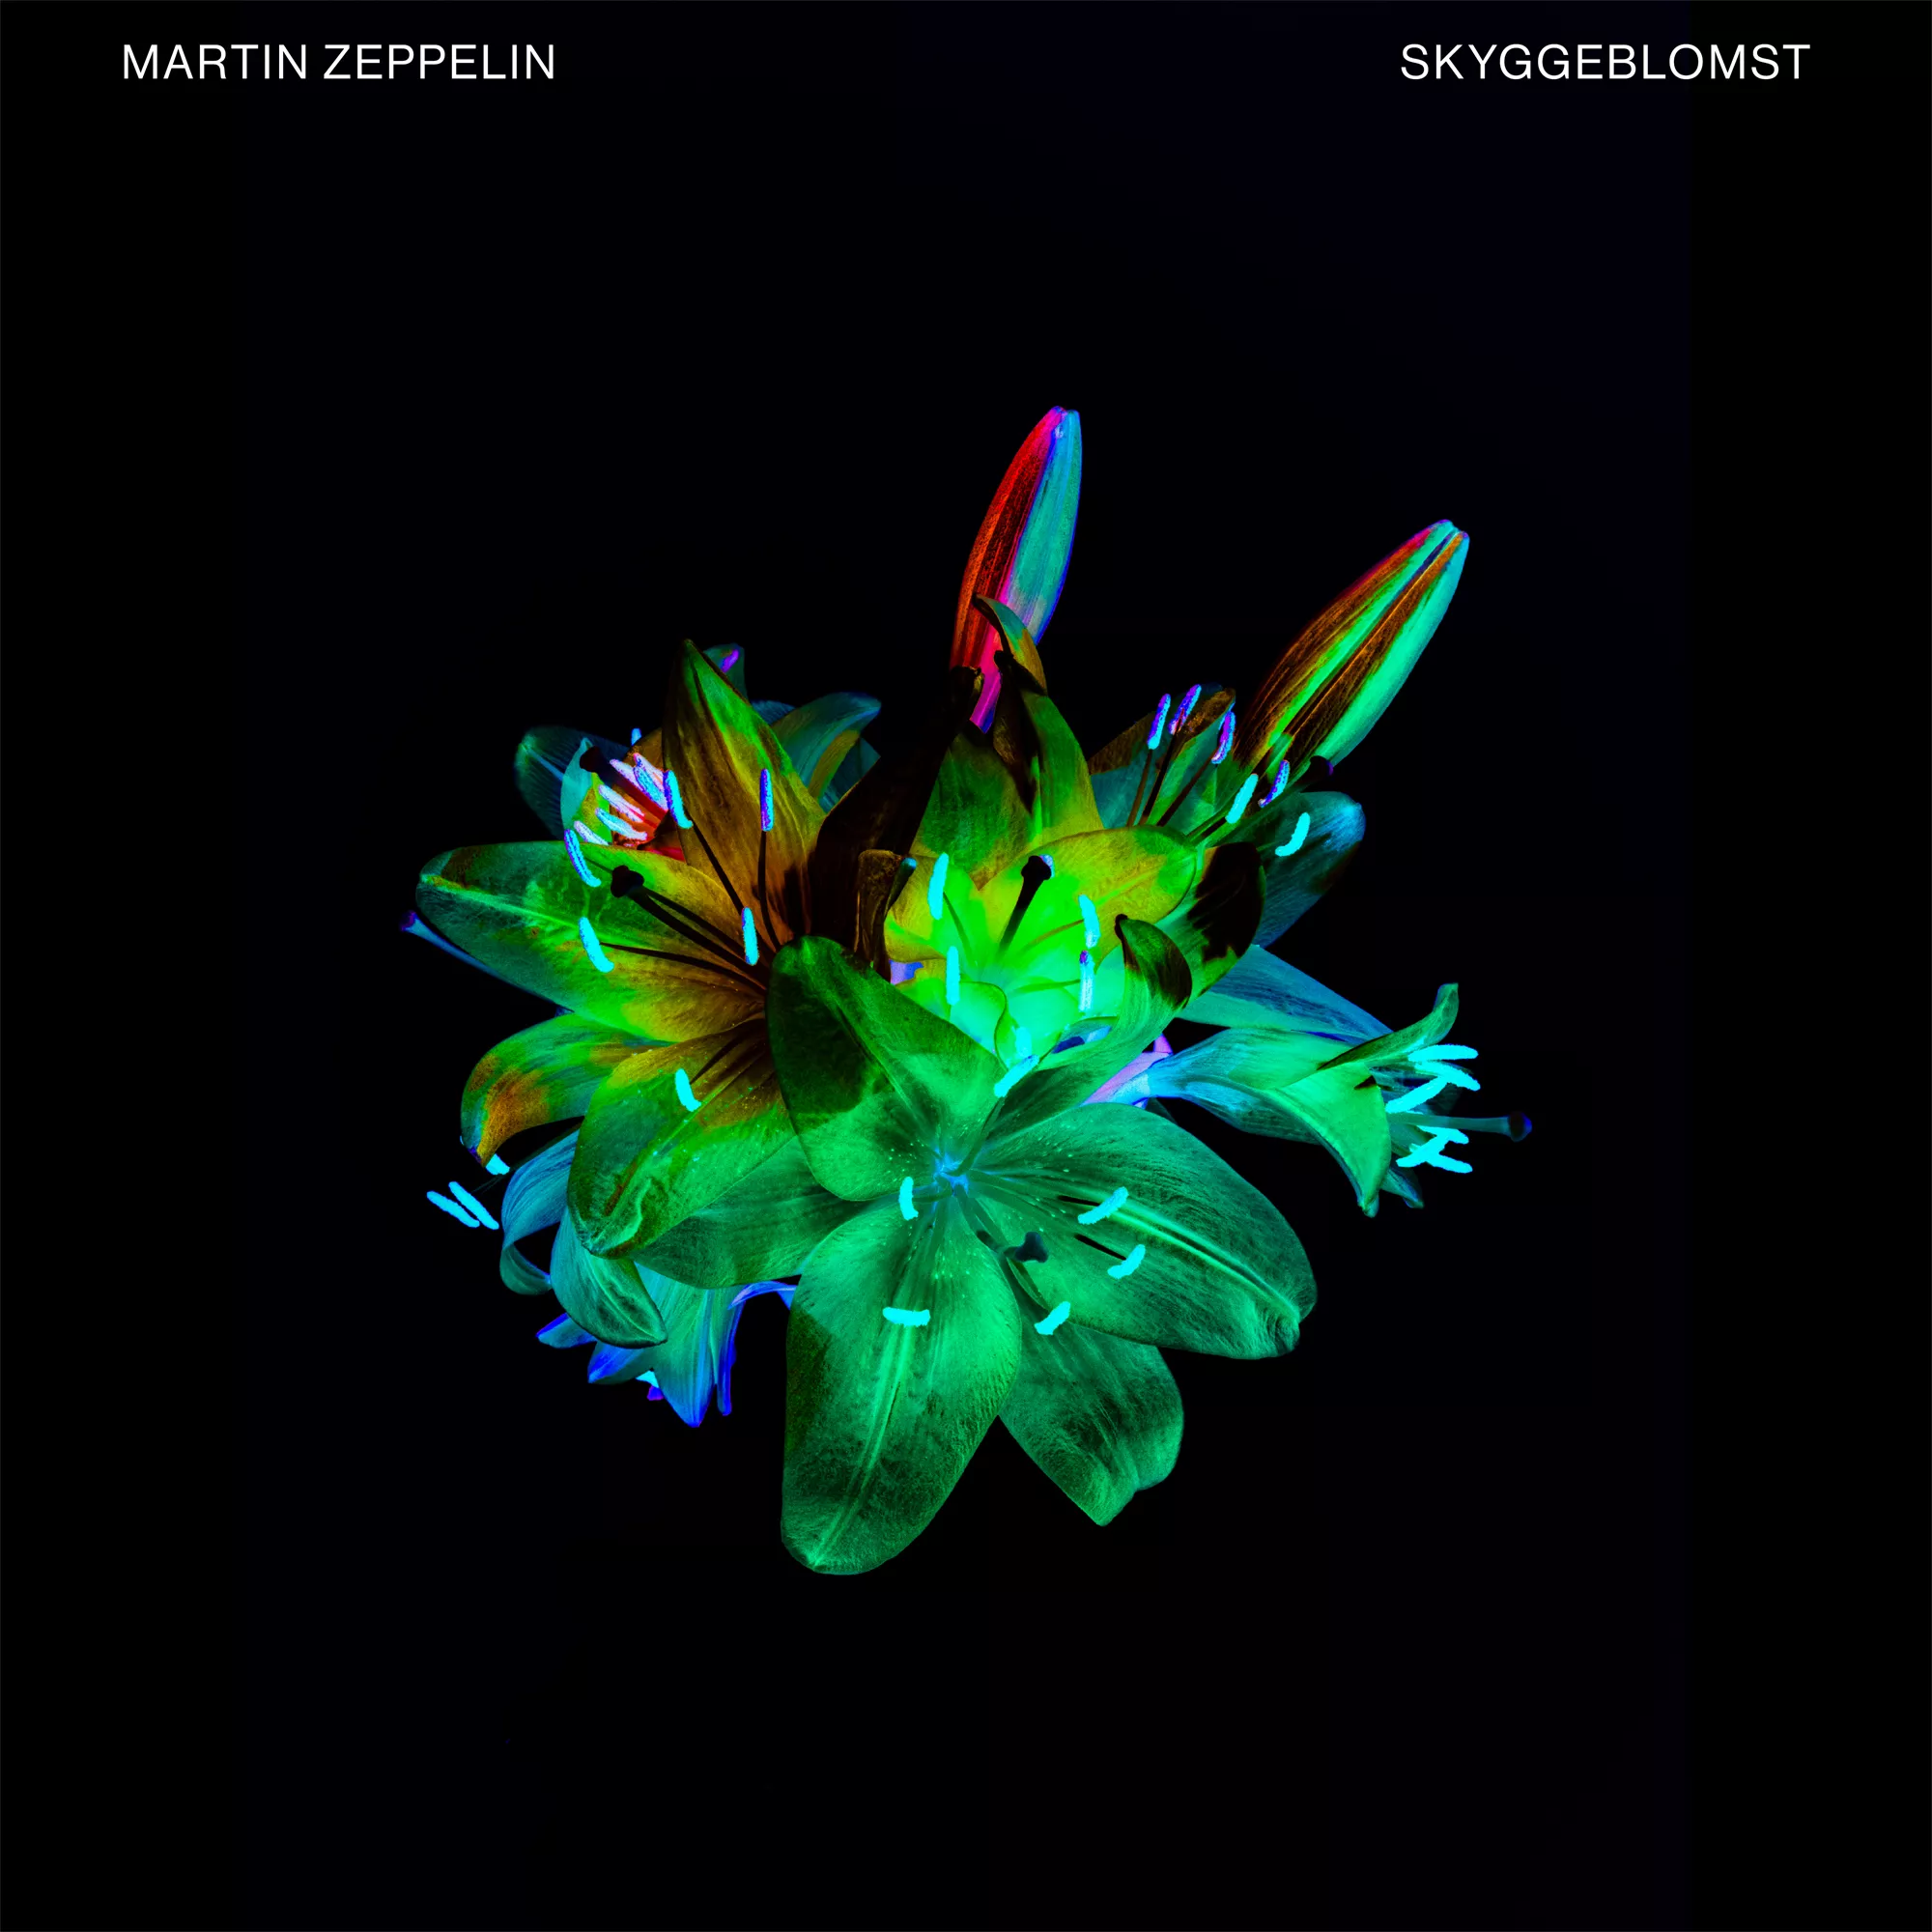 Skyggeblomst - Martin Zeppelin